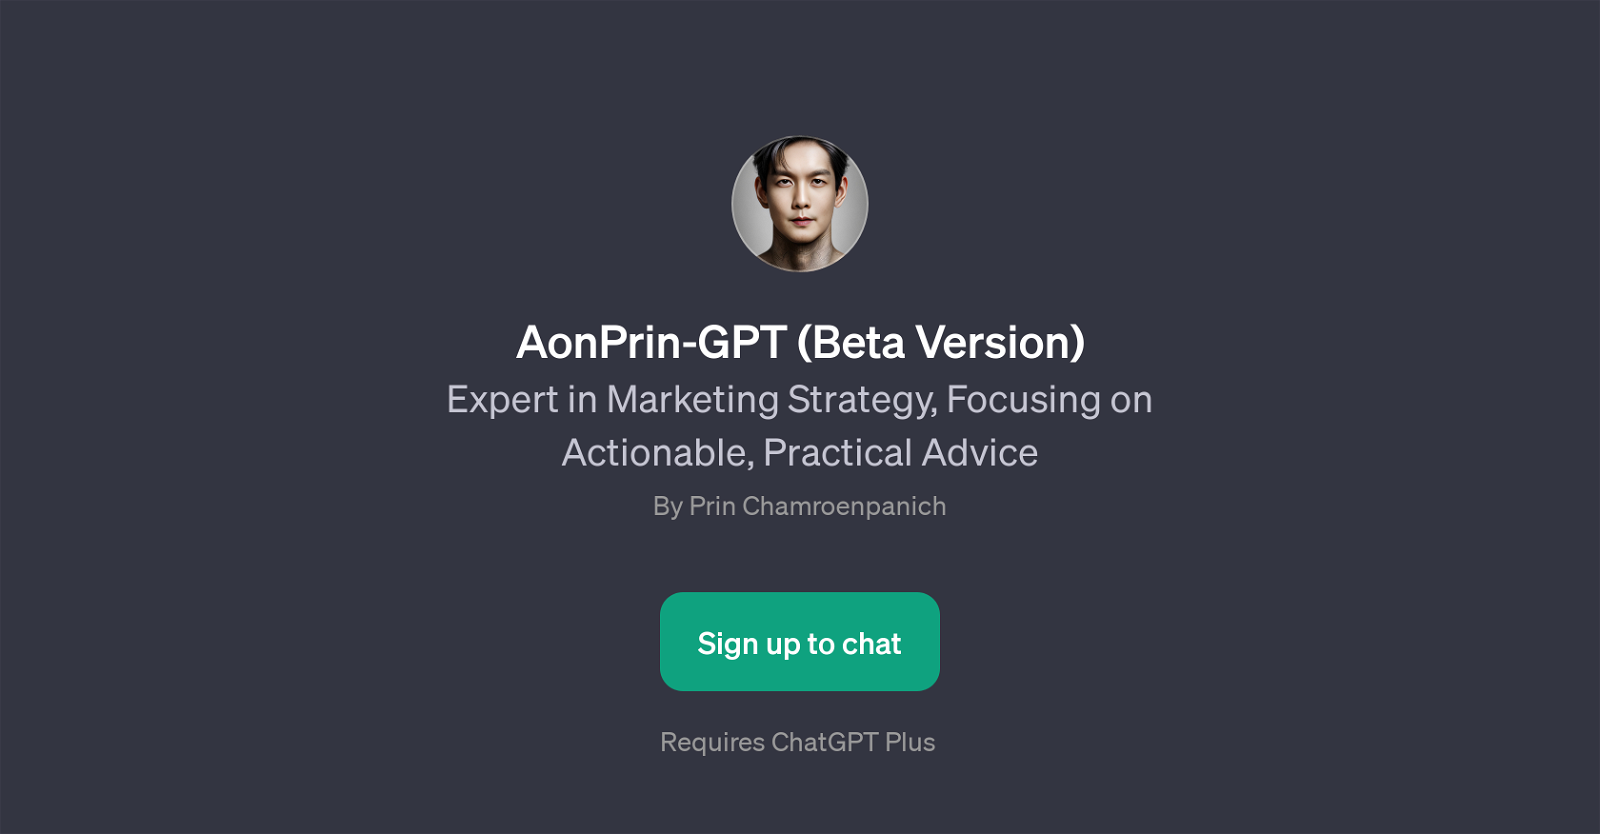 AonPrin-GPT (Beta Version) website